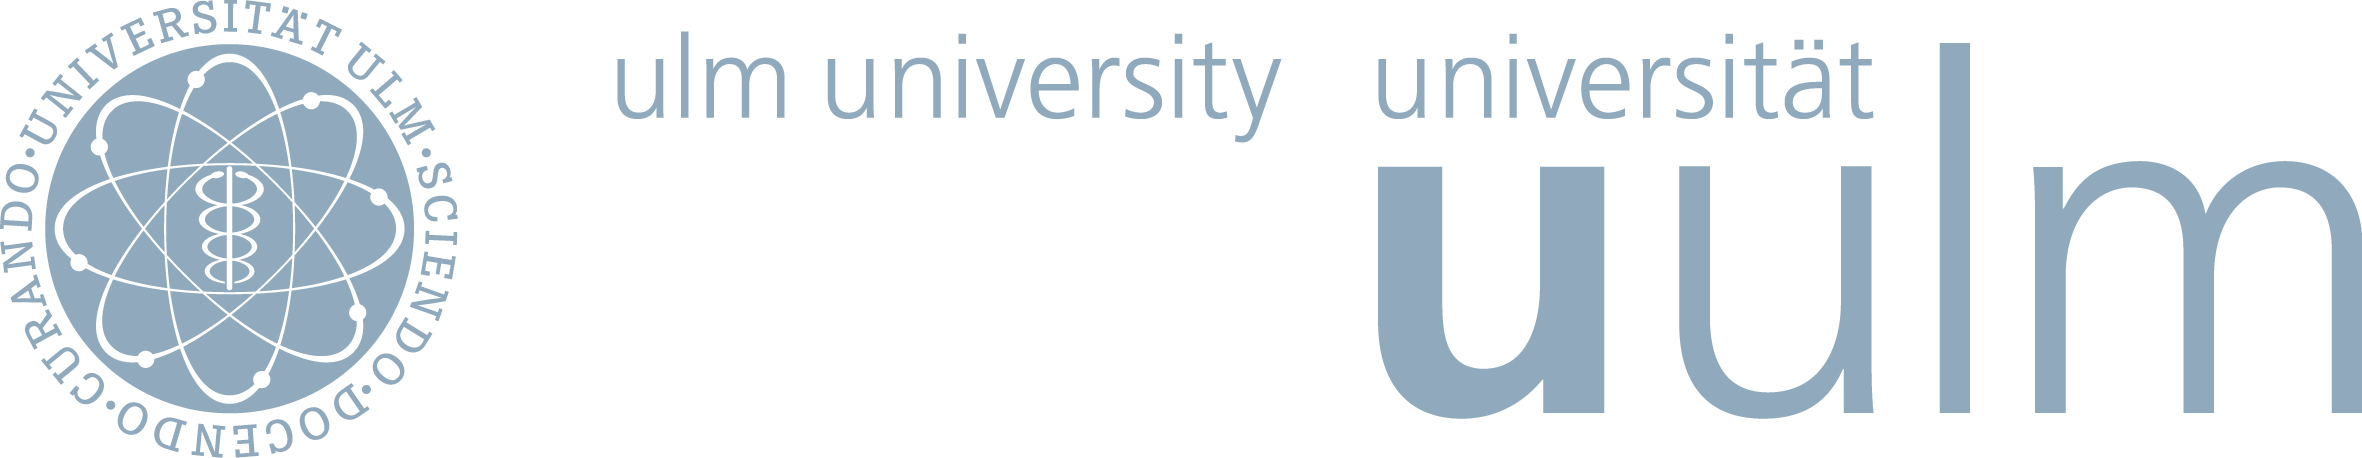 Uni Ulm logo